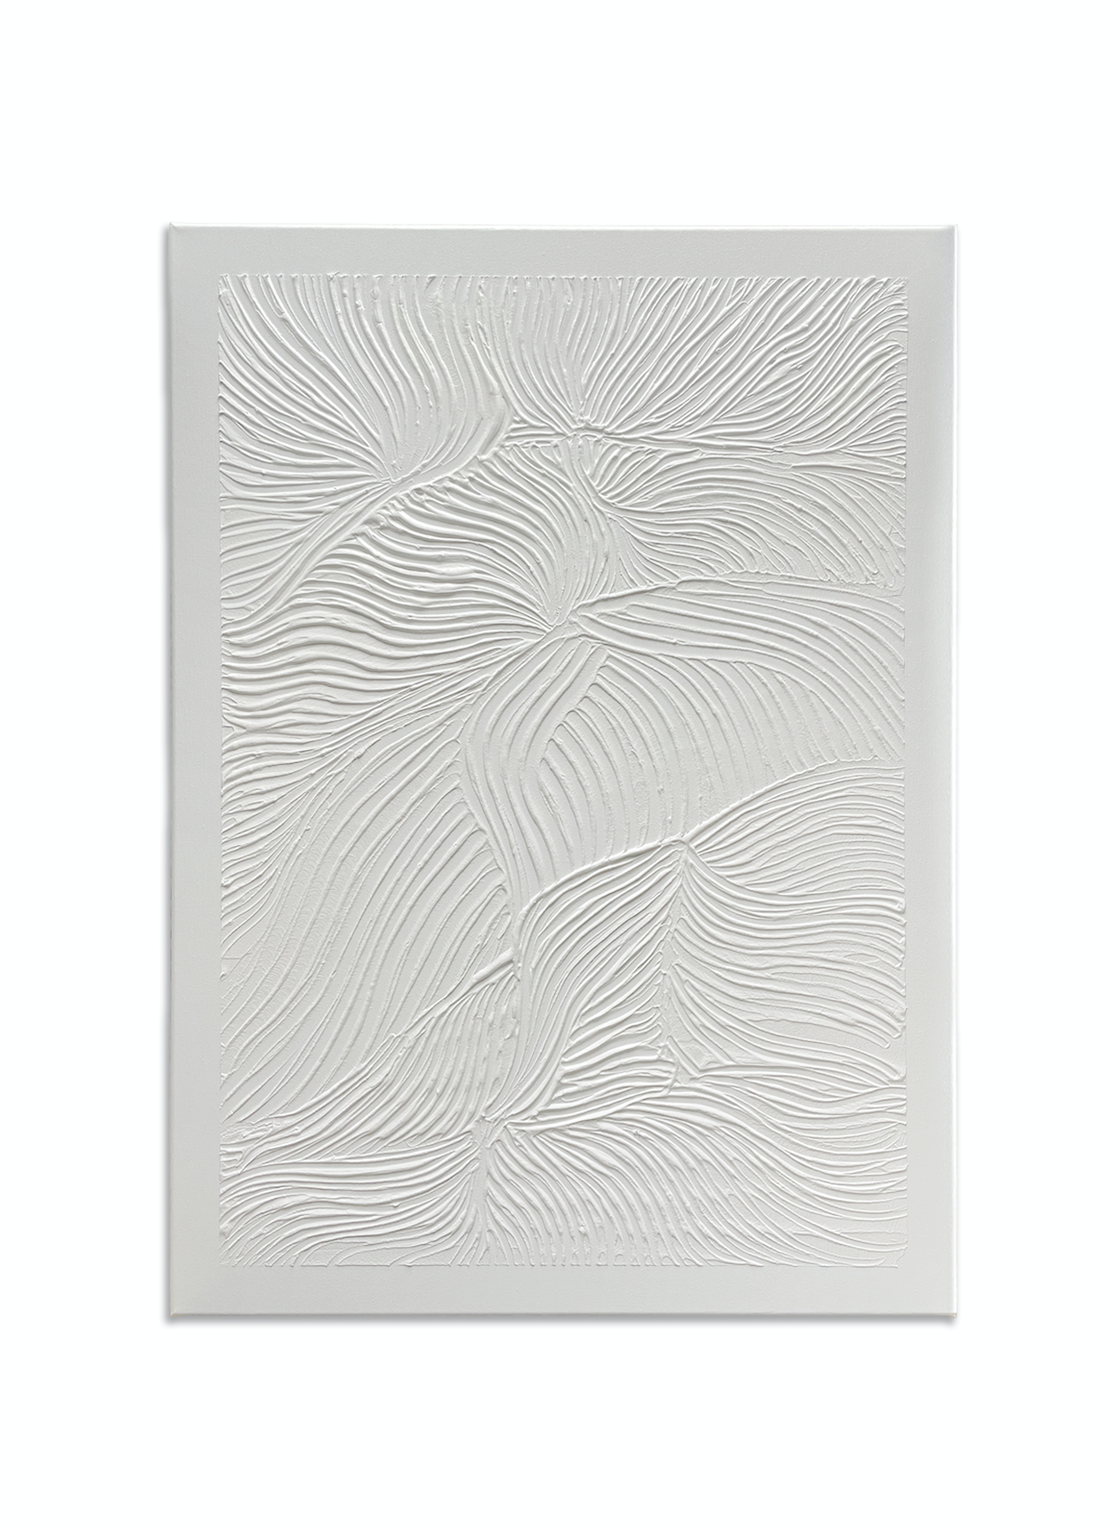 Tablou minimalist pictat manual, in relief - "Unite" Dimensiuni: 80x60 cm Pictura abstracta minimalista in relief Pasta de pictura pe canvas Semnat ATS pe spate